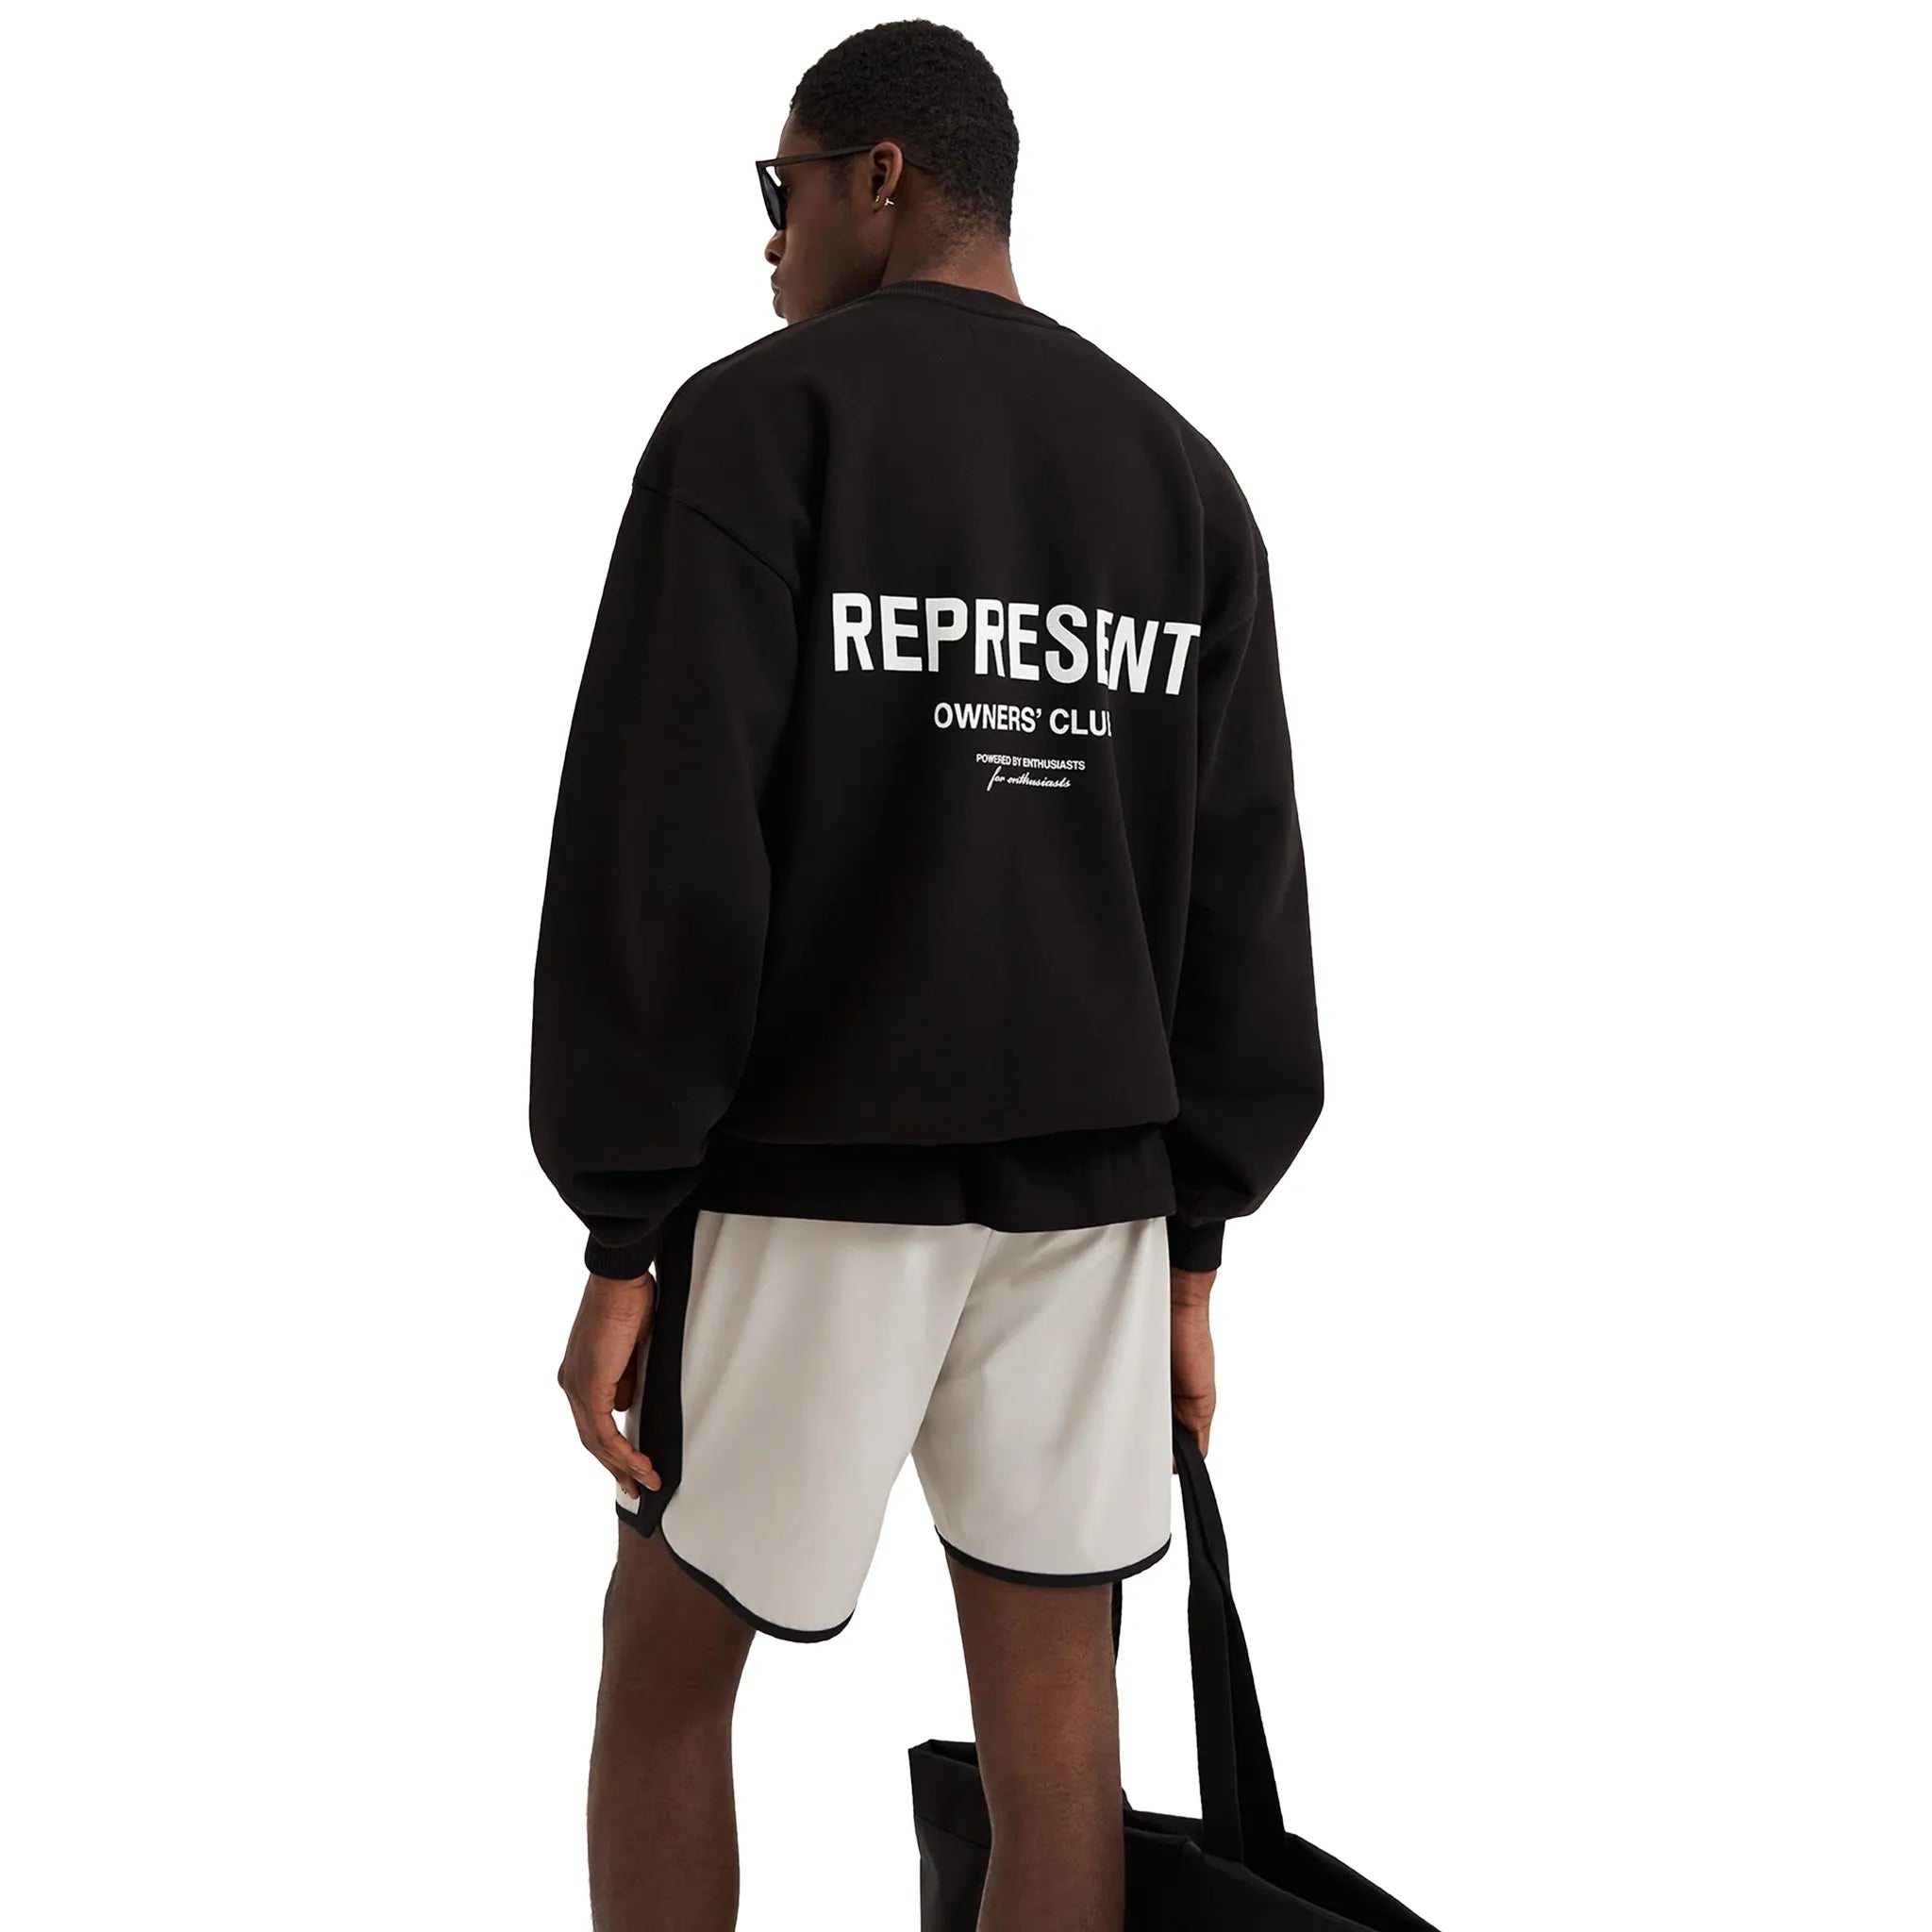 Model Back view of Represent Owners Club Black Sweatshirt M04159-01